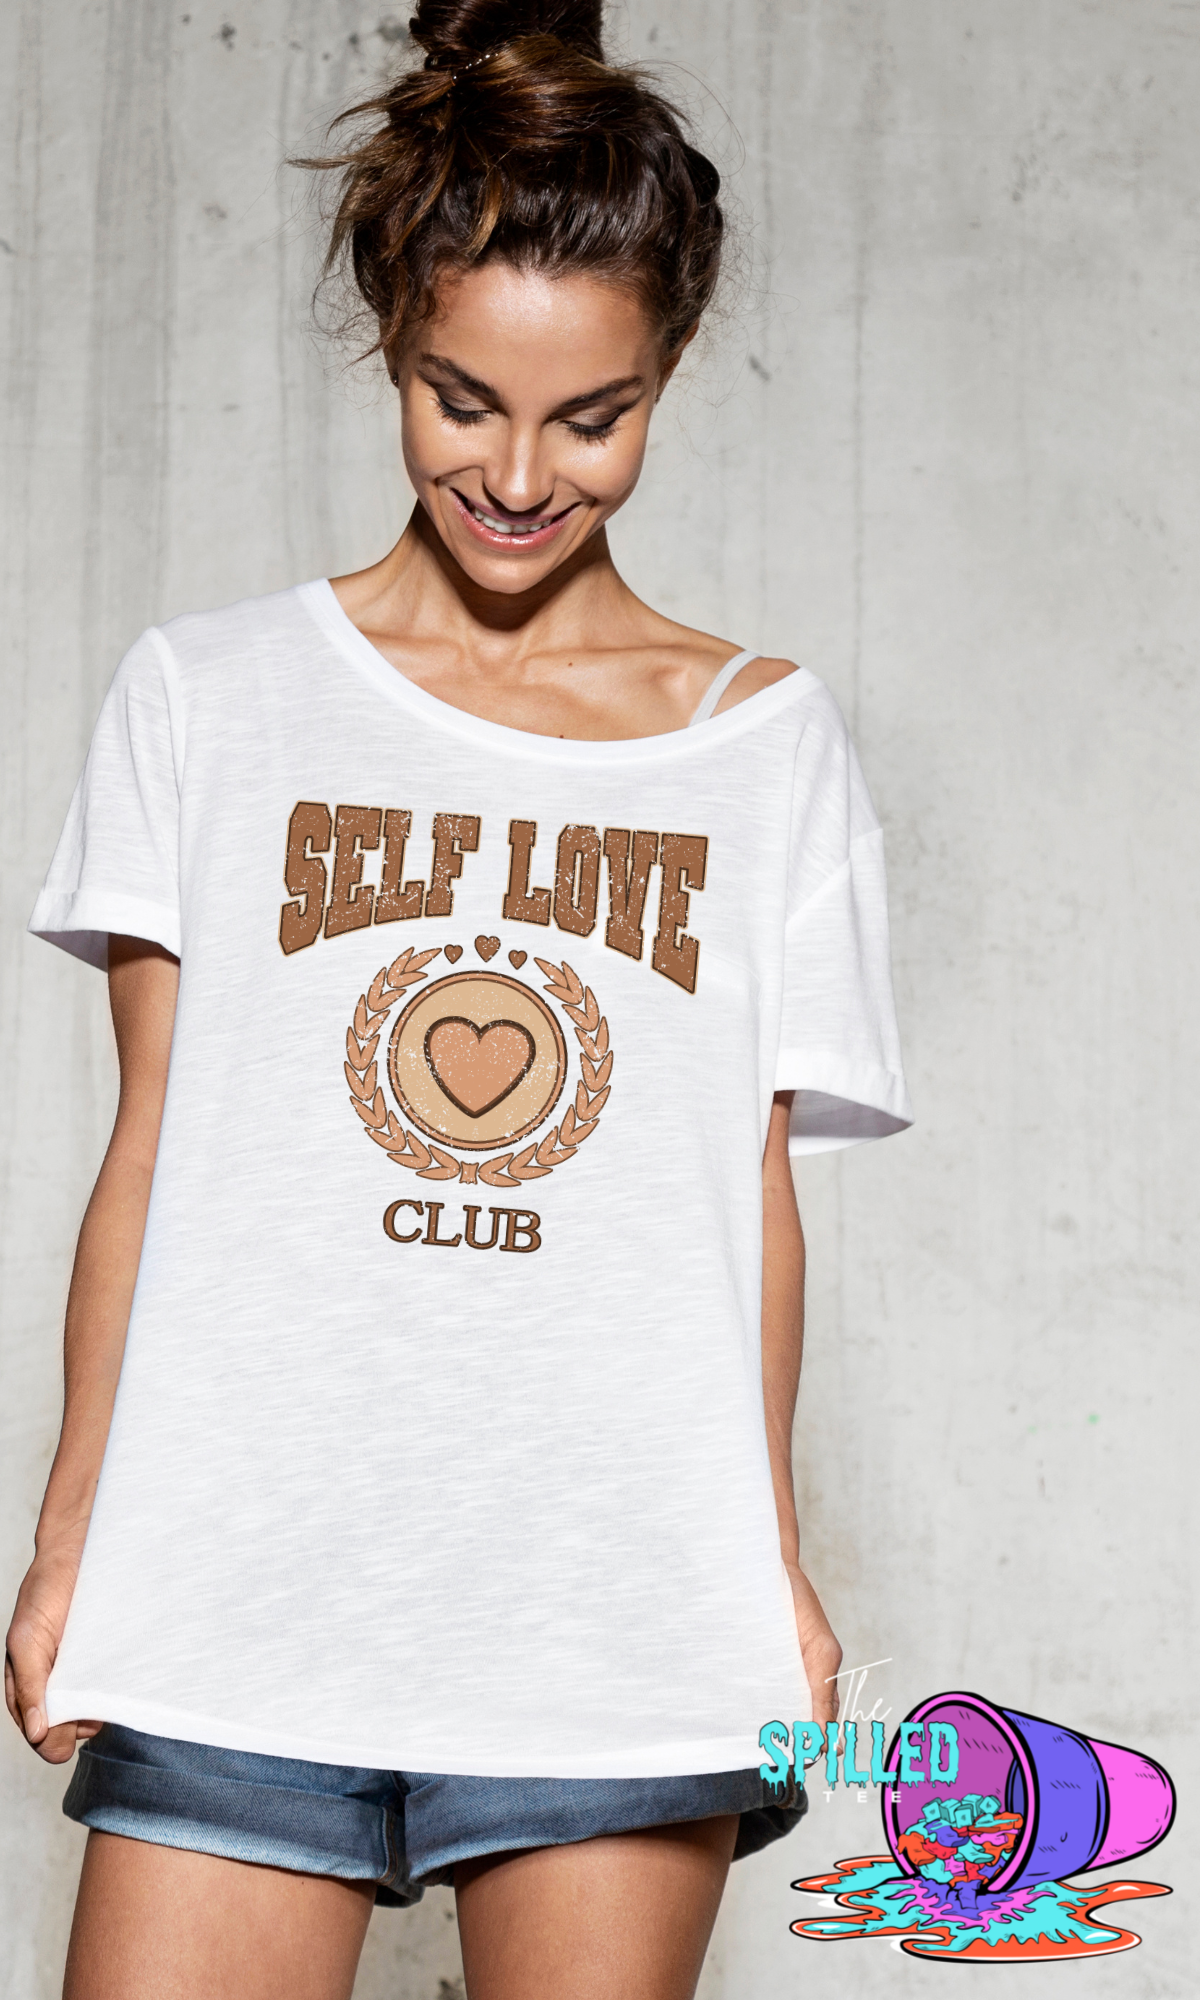 Self love Club